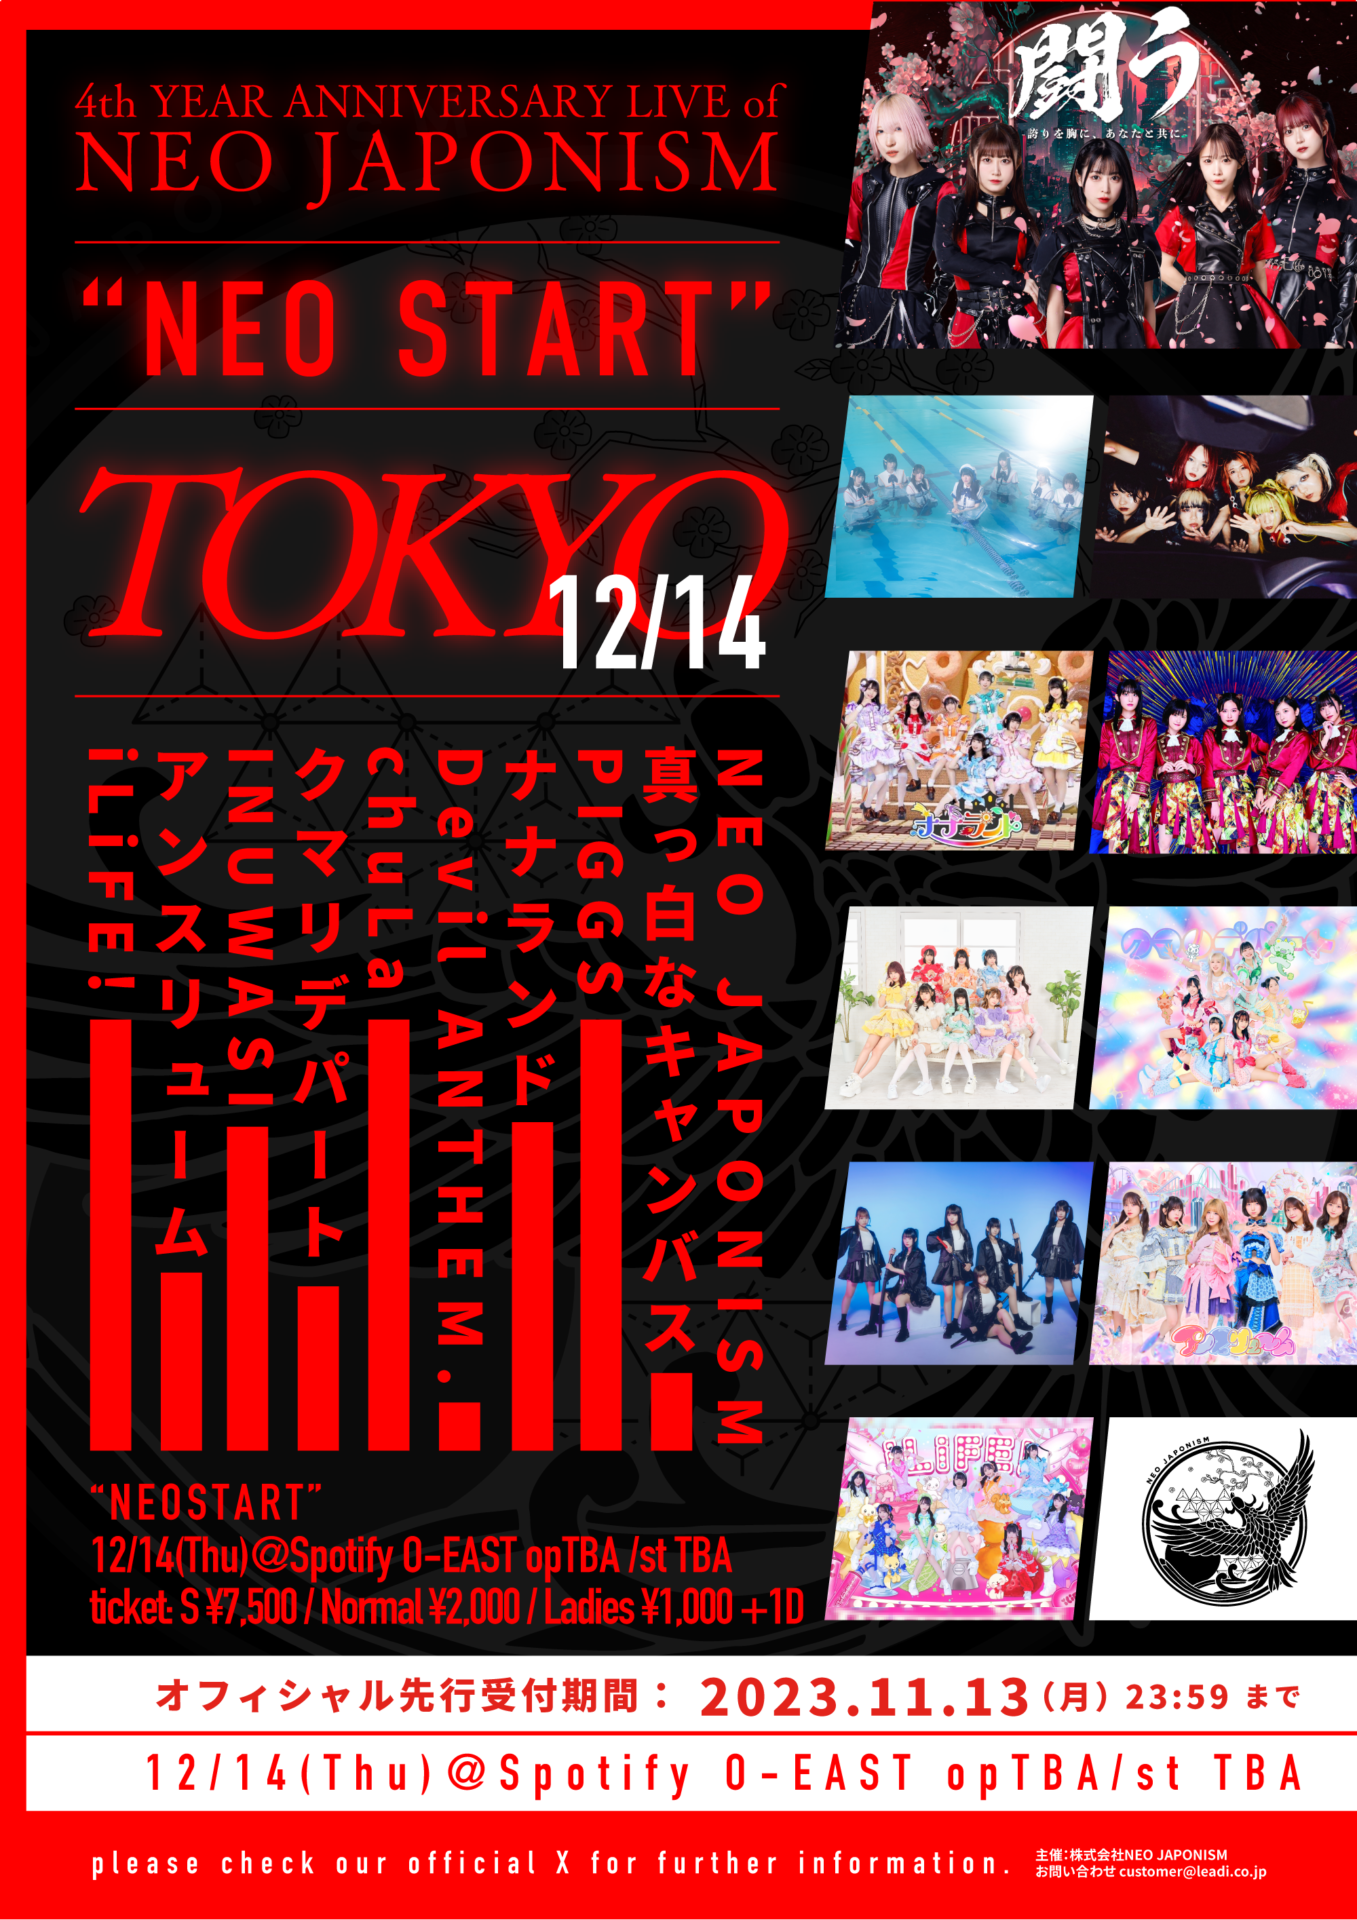 NEO JAPONISMデビュー4周年イベント “NEO START”